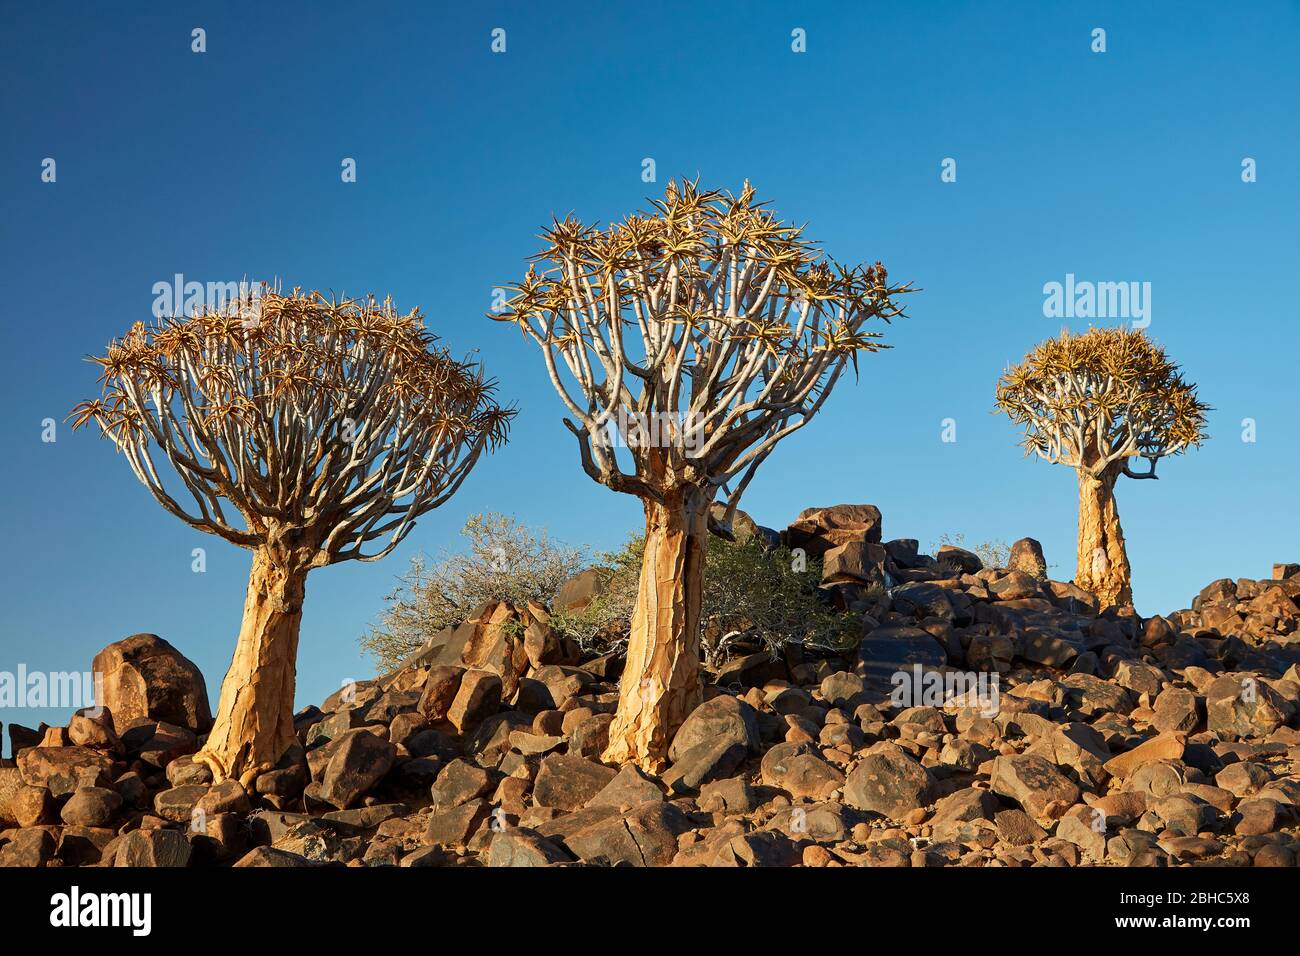 Kokerboom or Quiver Trees (Aloe dichotoma), Mesosaurus Fossil Camp, near Keetmanshoop, Namibia, Africa Stock Photo